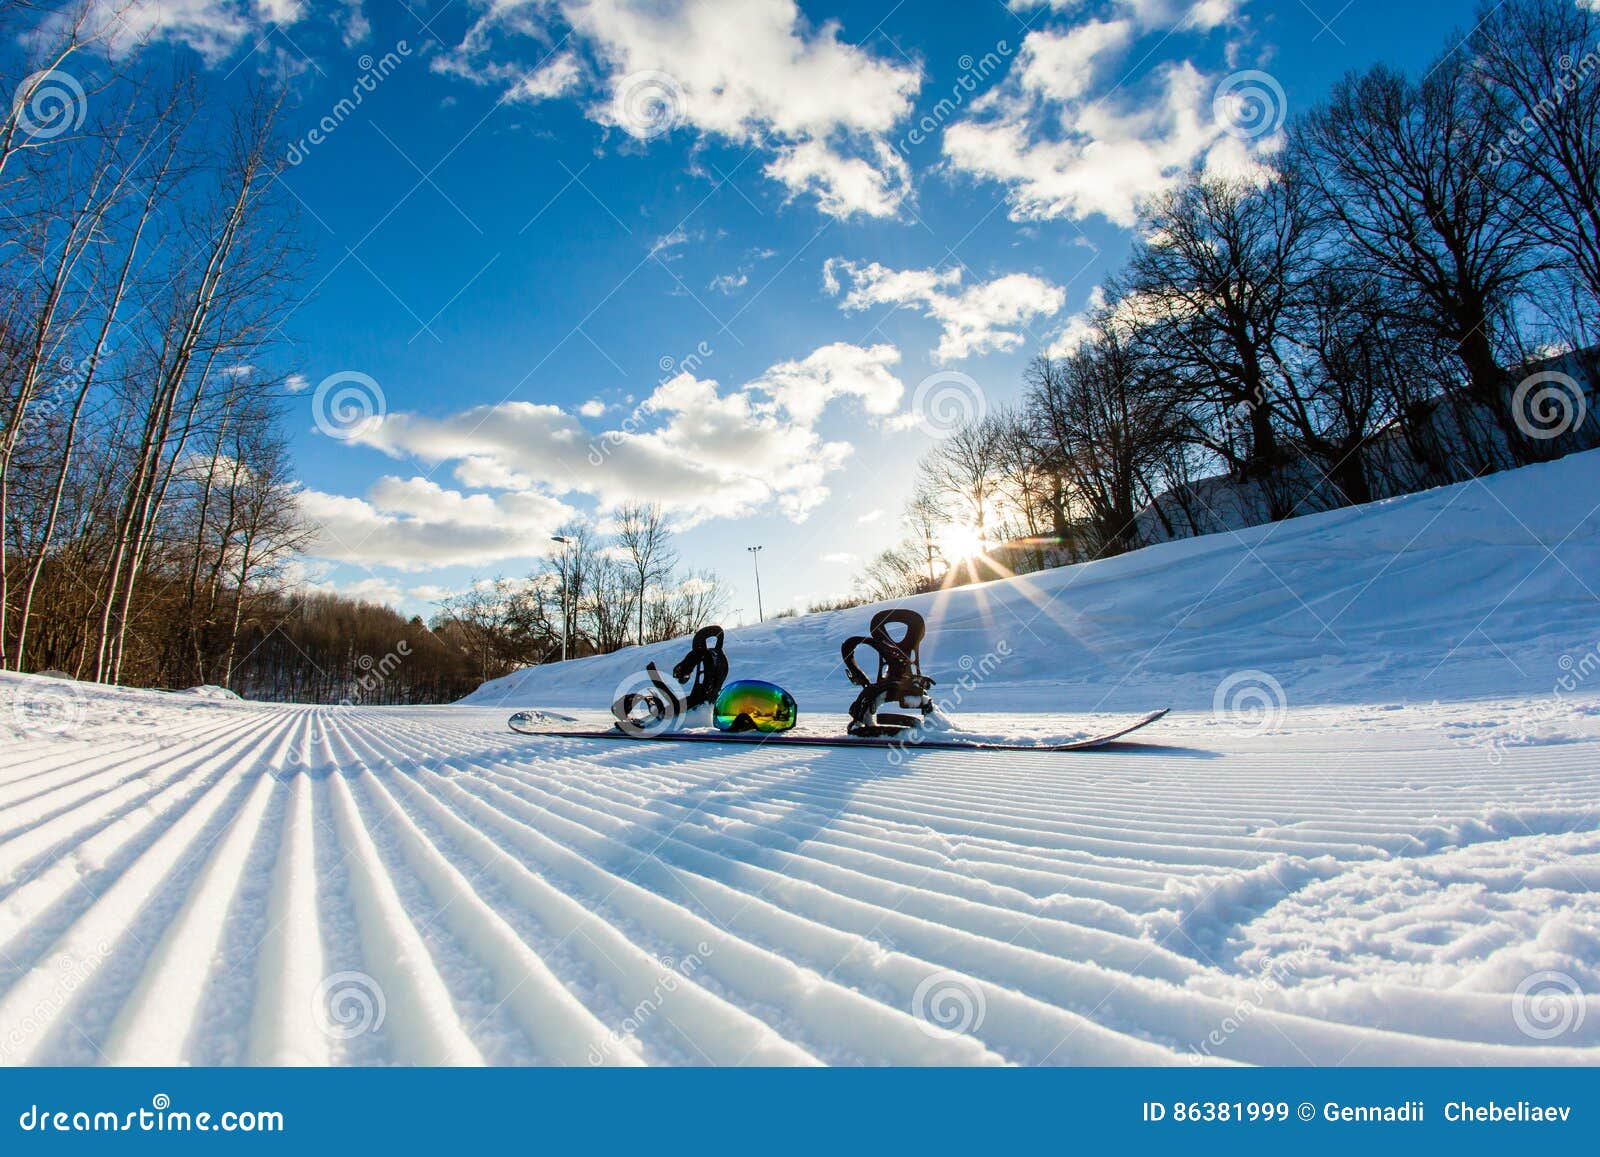 unbroken ski slope, snowboard and goggles